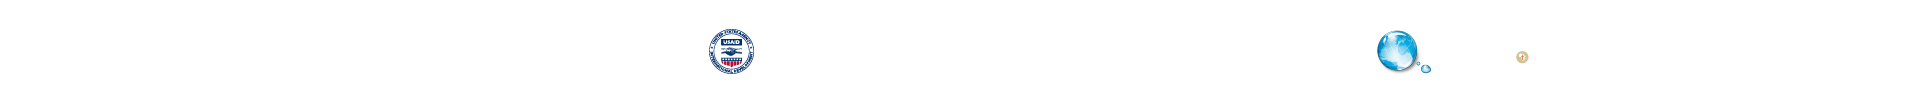 Isoko yUbuzima_Powerpoint Footer_white logos transparent